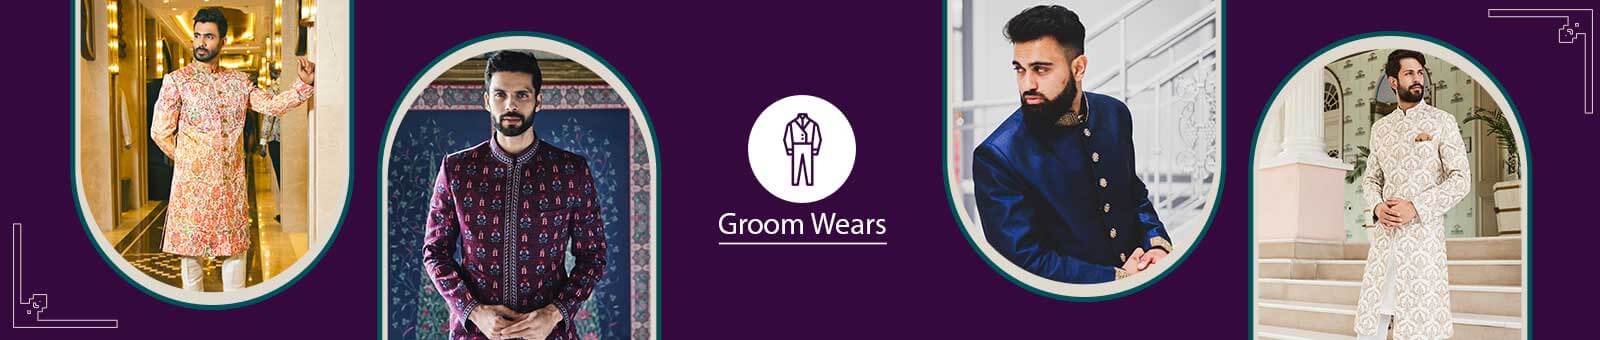 Groom Wears